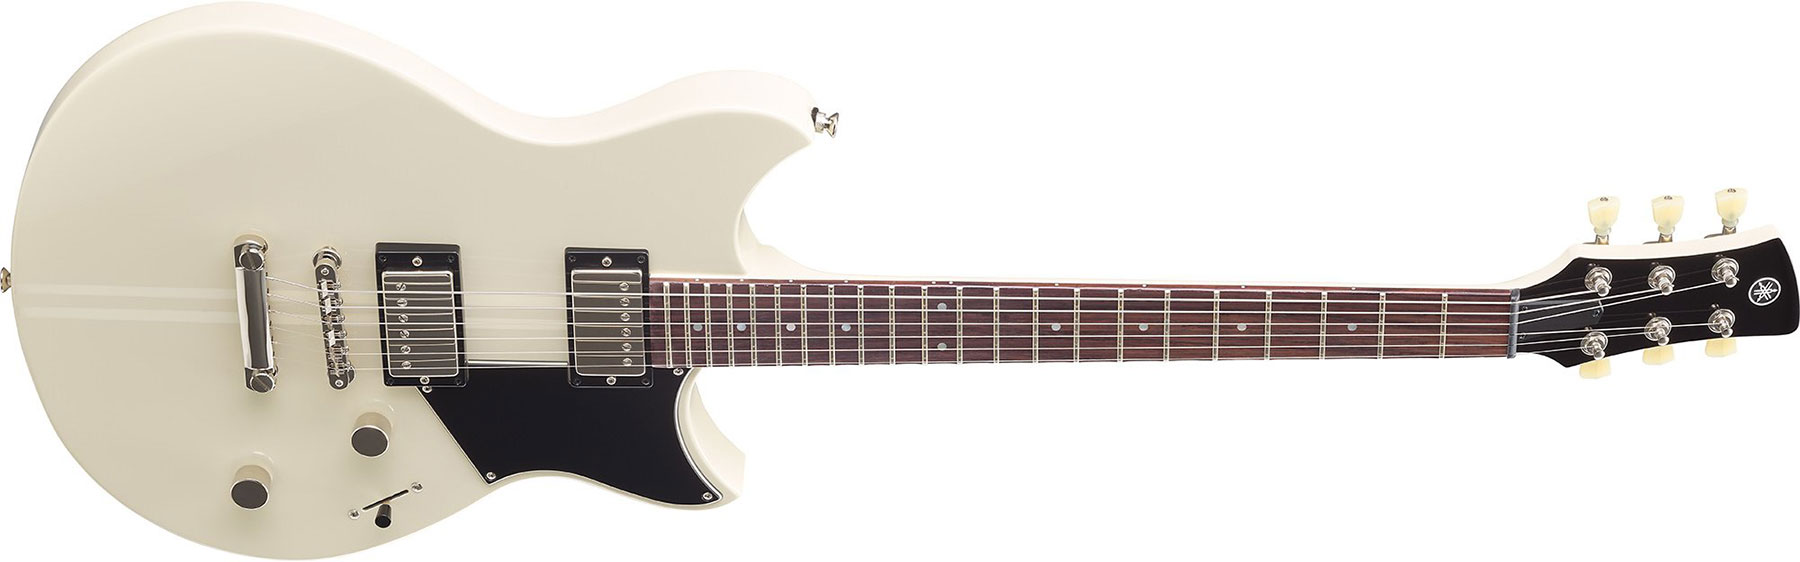 Yamaha Rse20 Revstar Element Hh Ht Rw - Vintage White - Double cut electric guitar - Variation 1